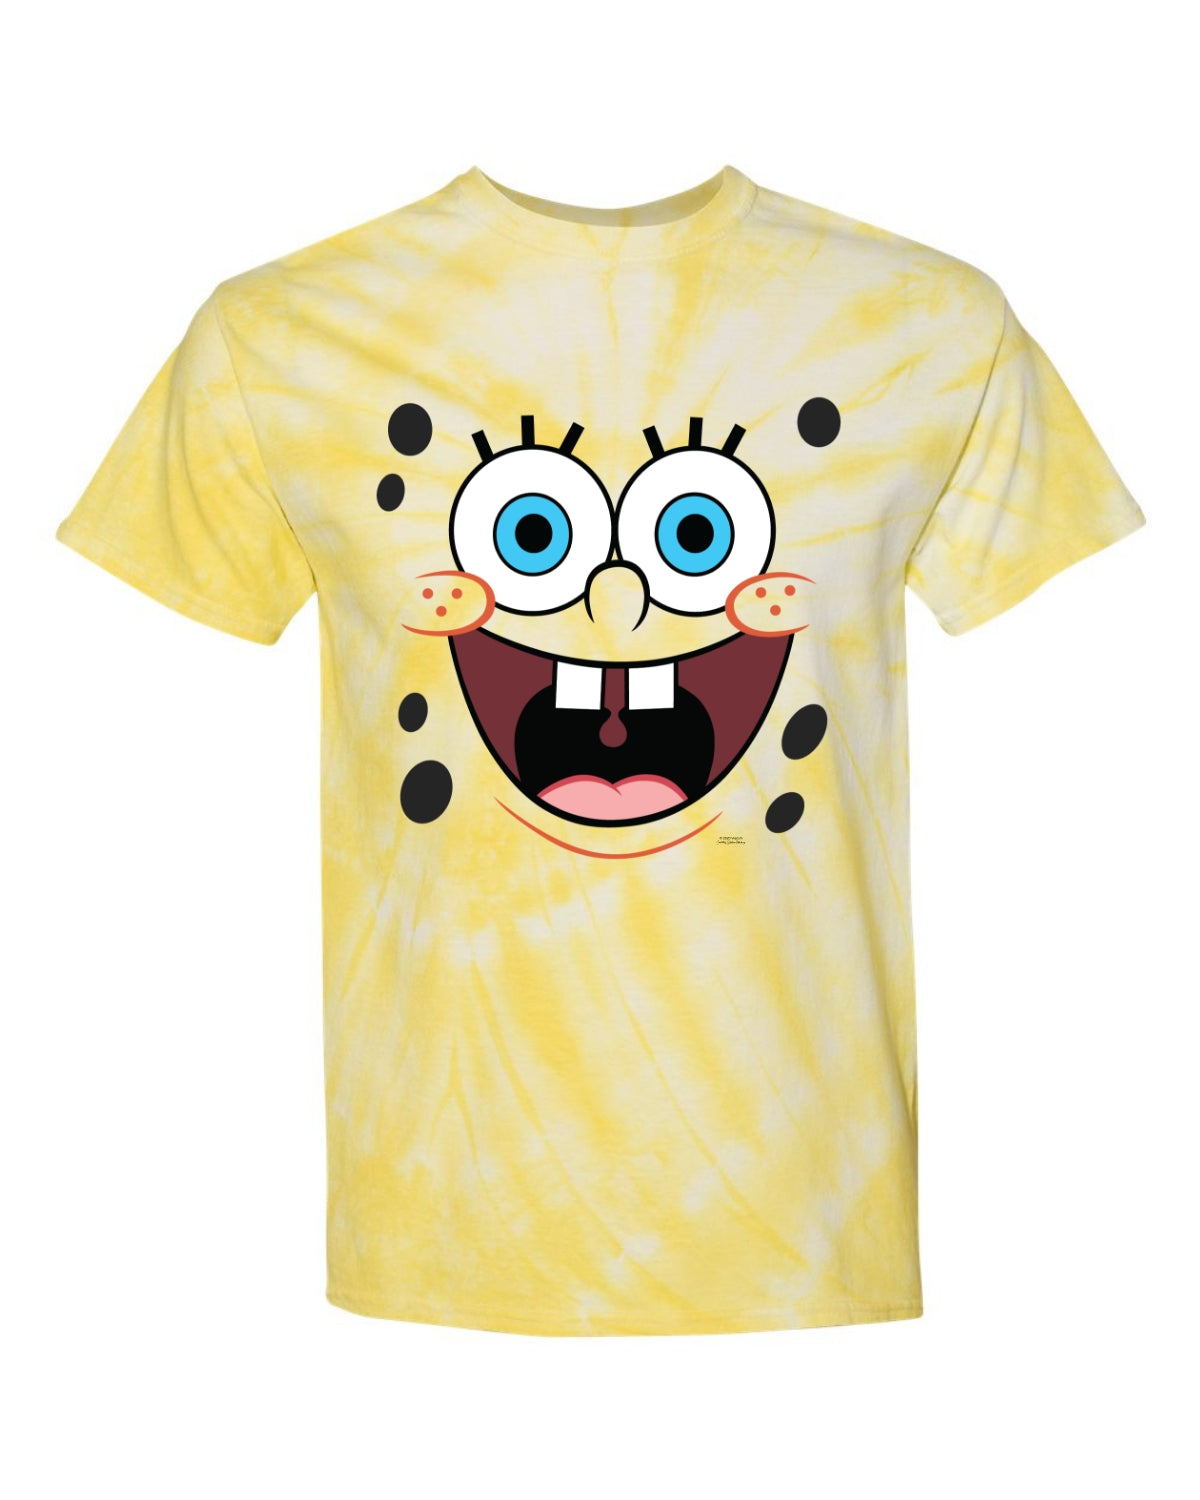 SpongeBob SquarePants Big Face Tie-Dye Short Sleeve T-Shirt